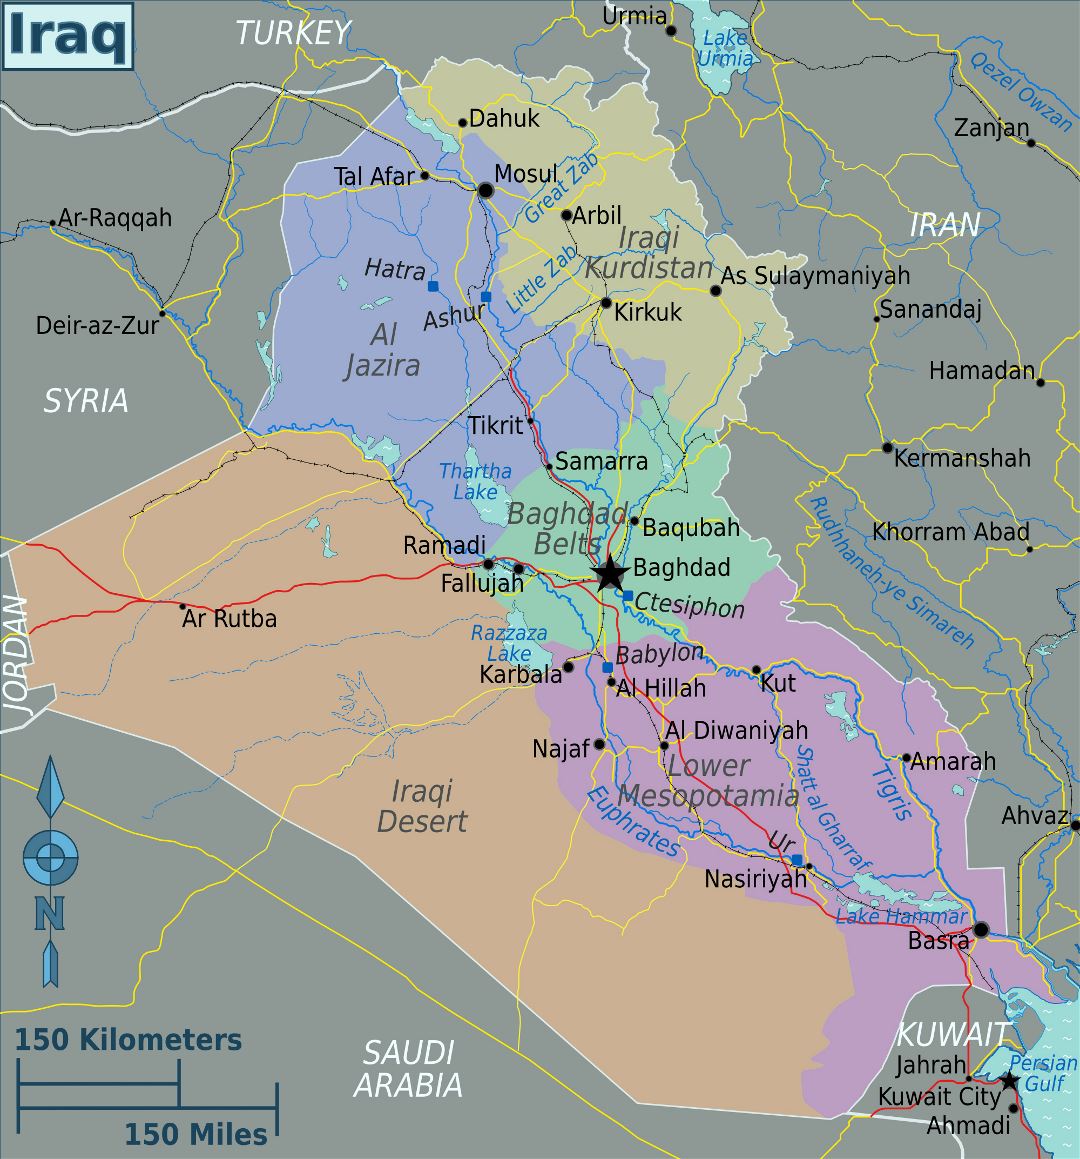 Large regions map of Iraq